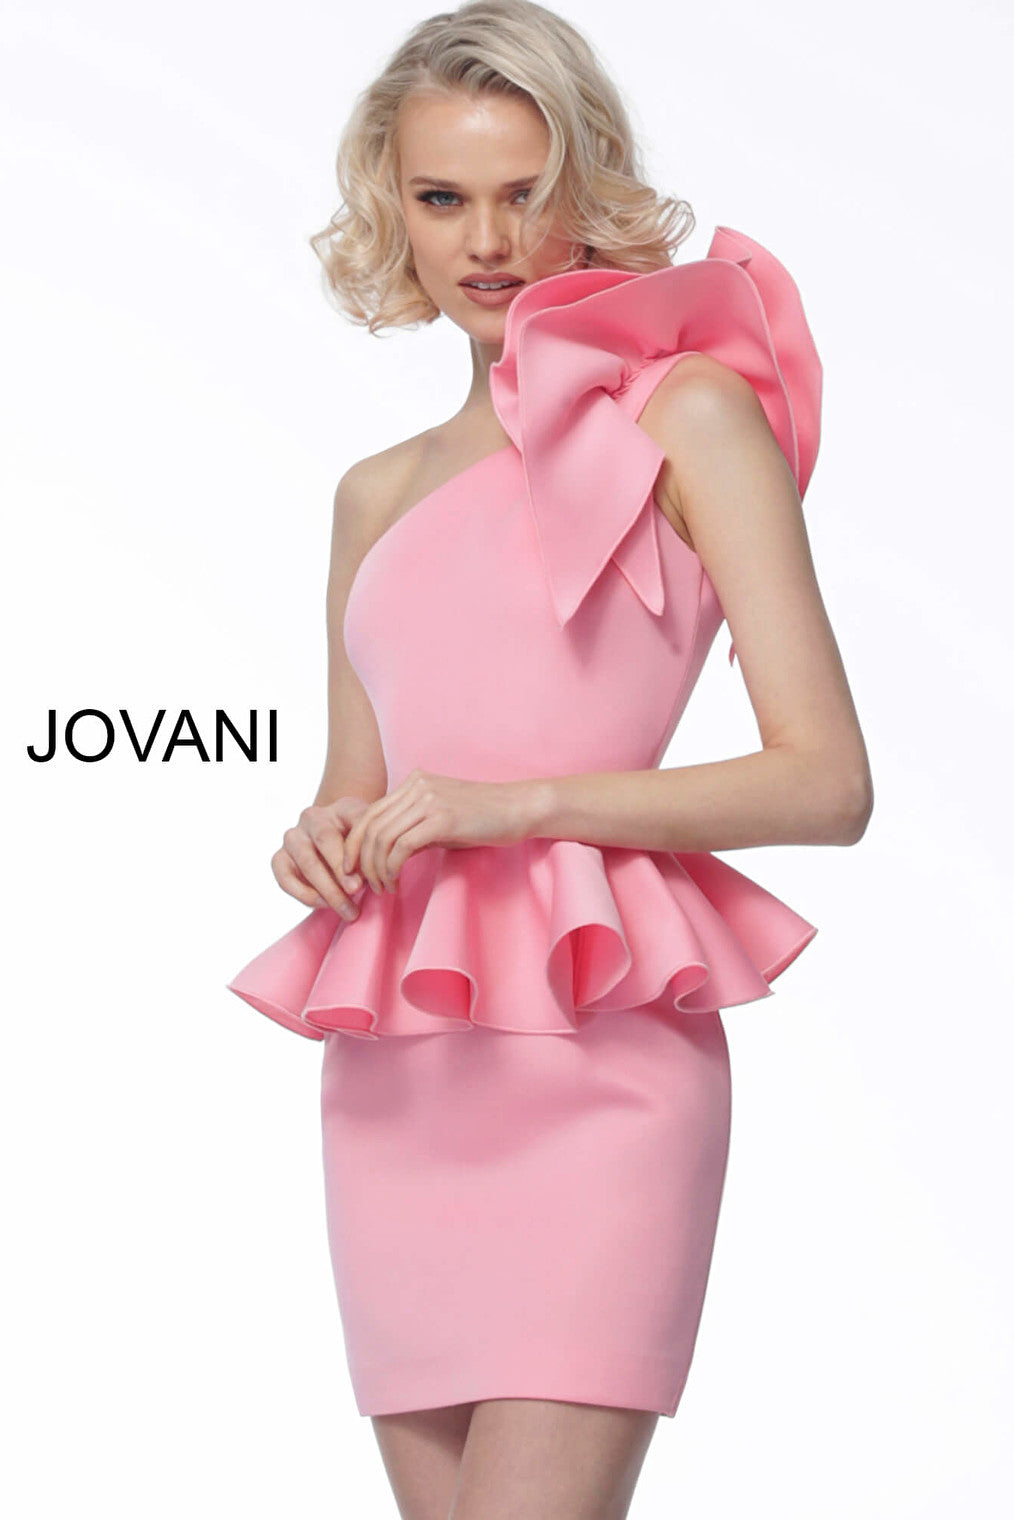 Jovani ruffle peplum short dress 1400